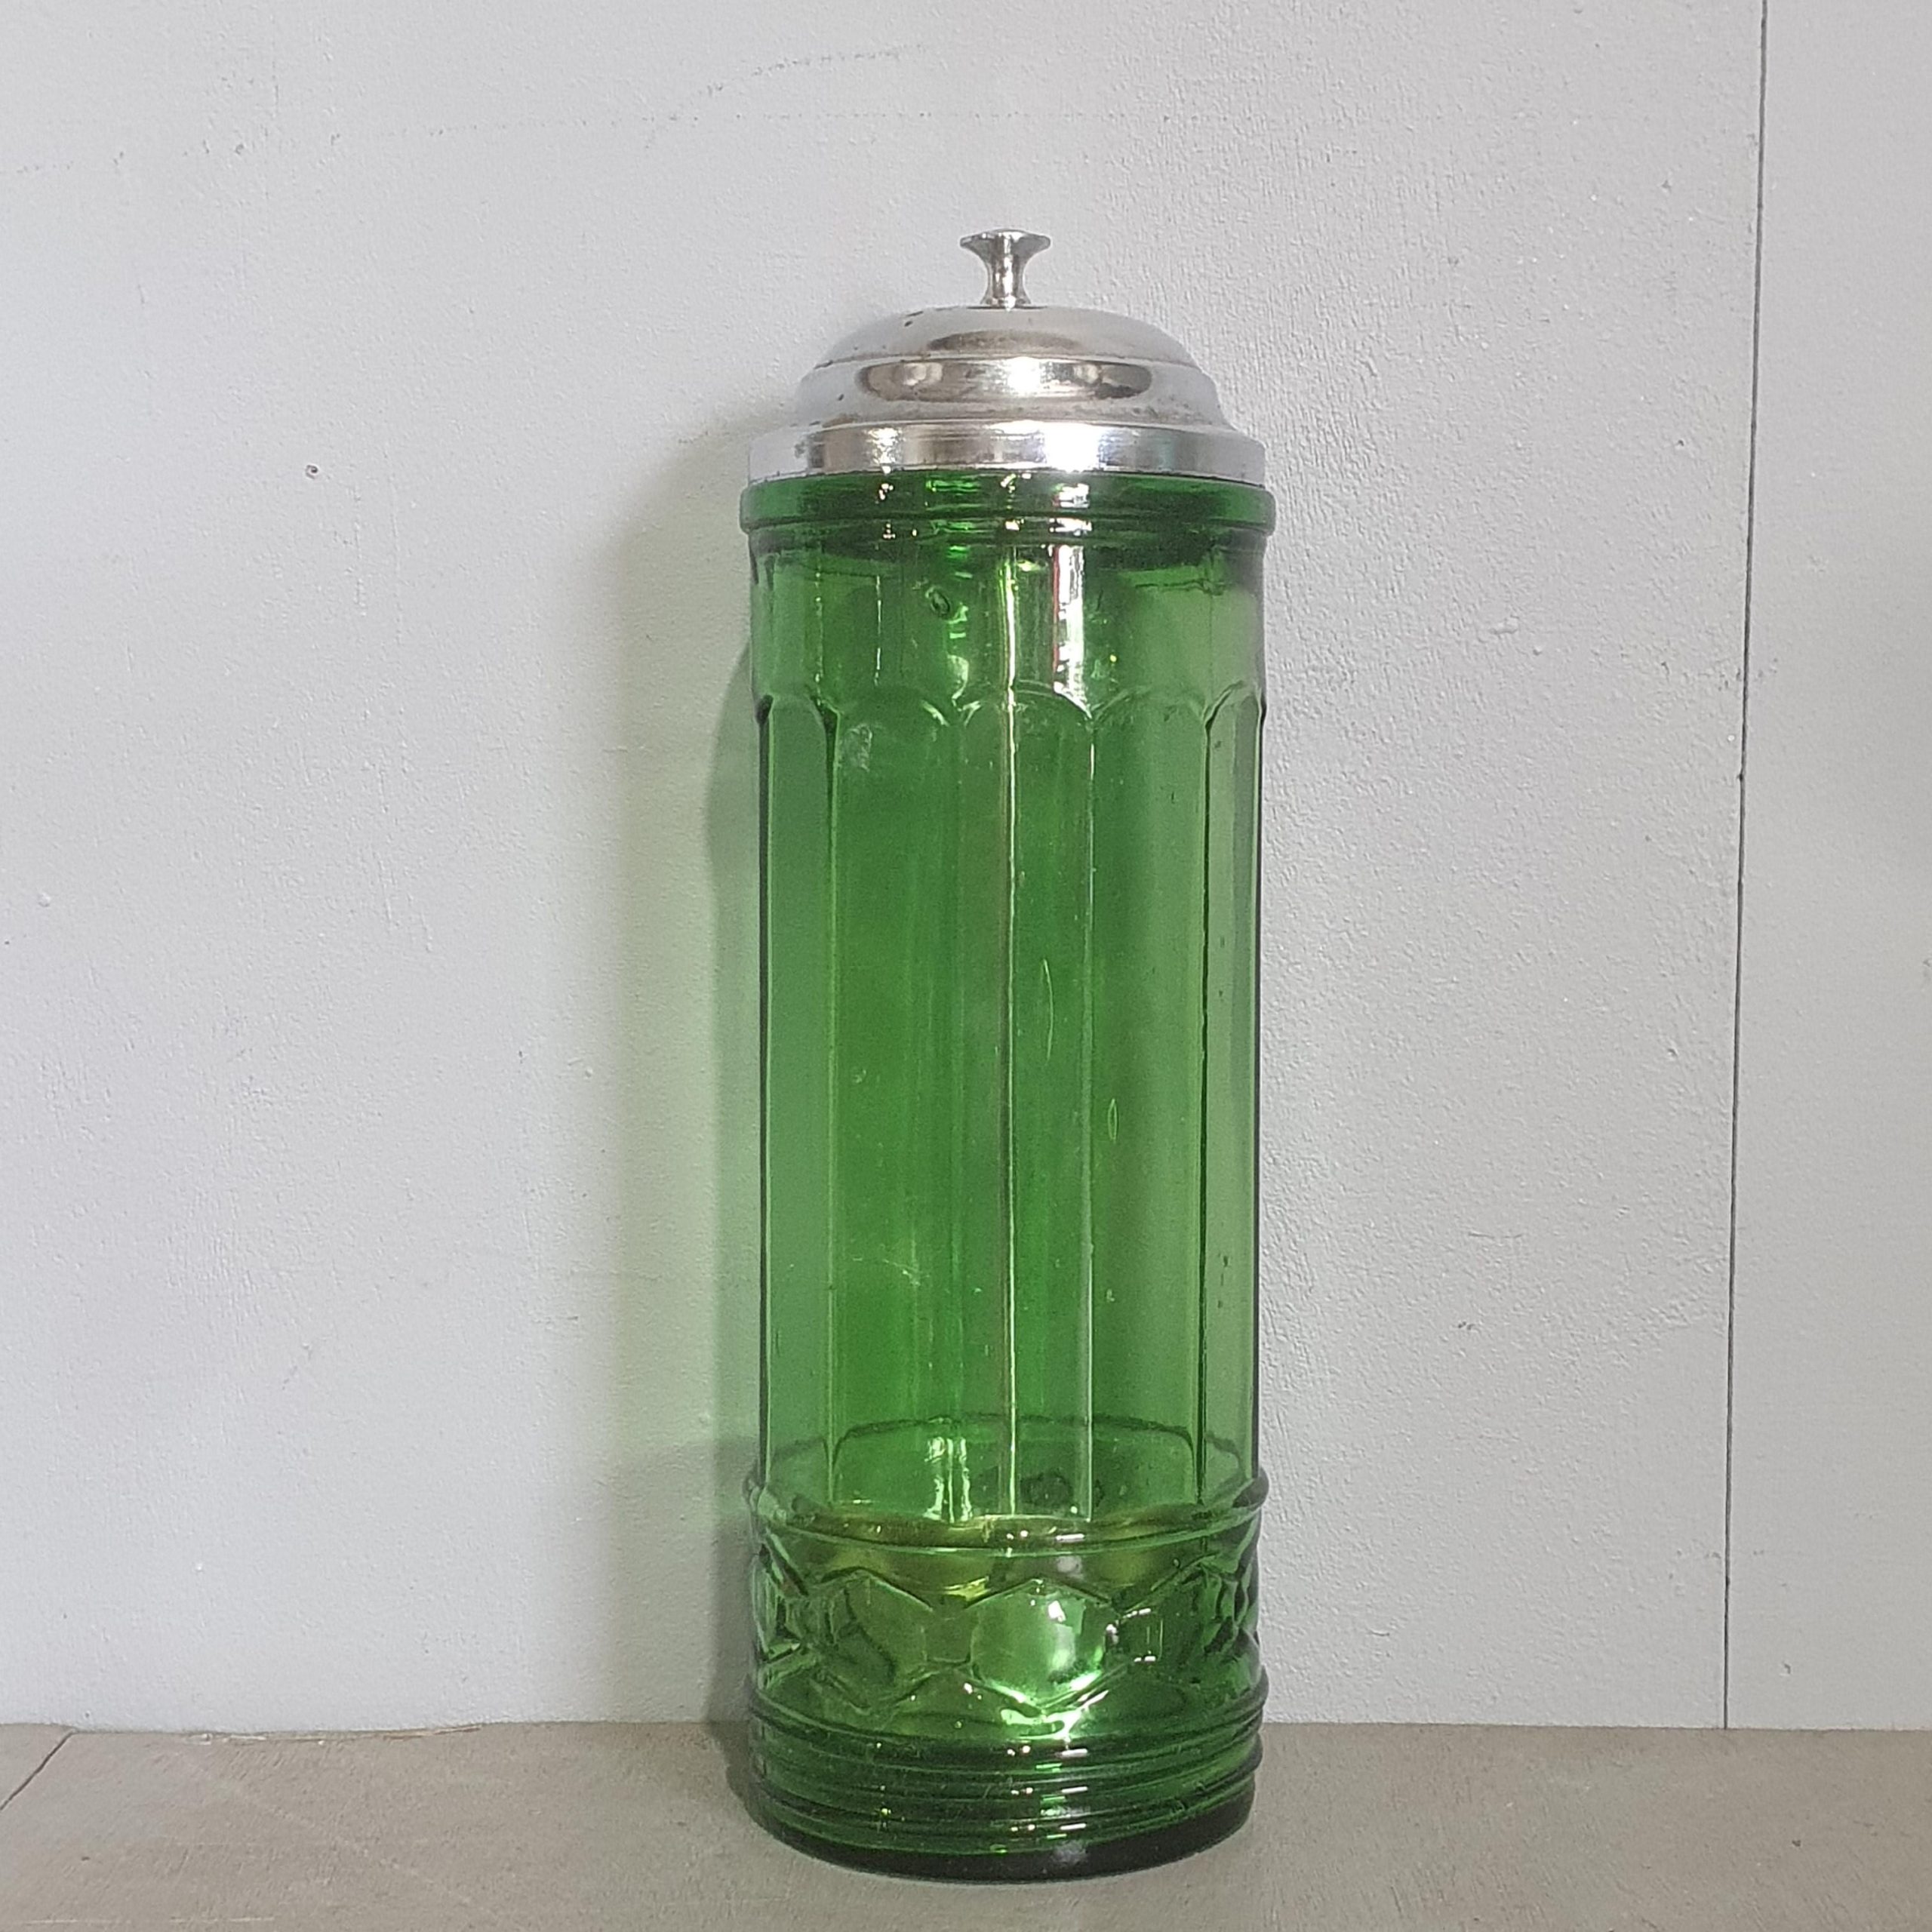 https://www.trampsprophire.com/wp-content/uploads/2022/12/Vintage-Green-Glass-Straw-Holder-2022323-GB1-1-scaled.jpg